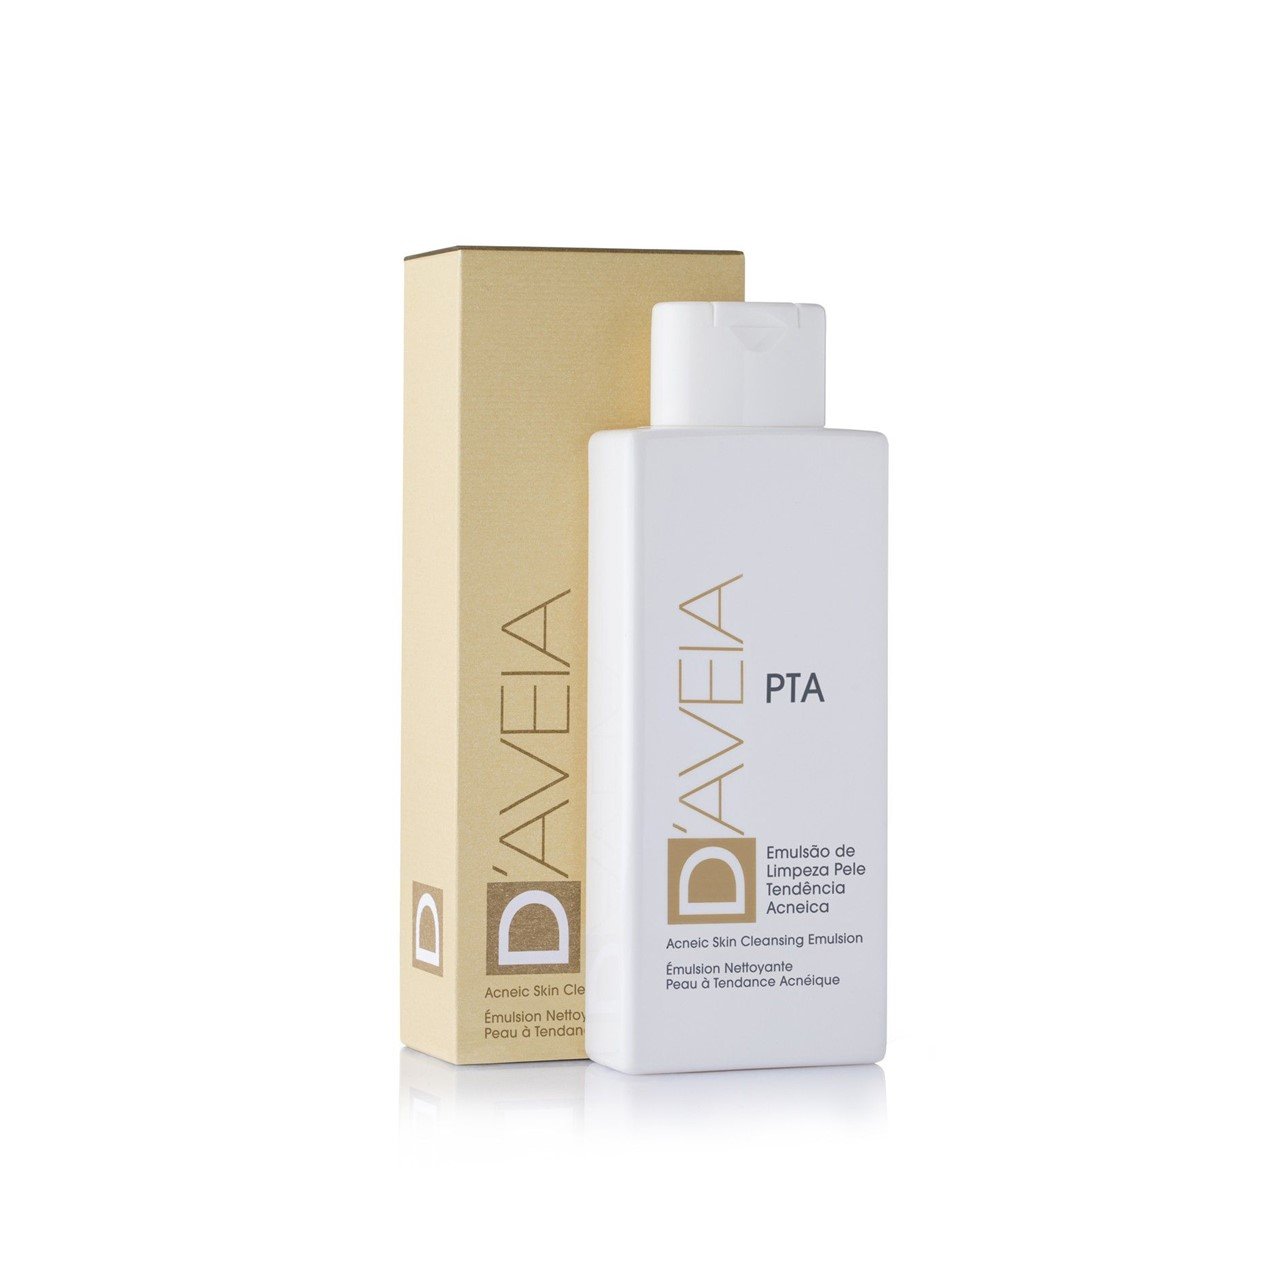 D'AVEIA PTA Acneic Skin Cleansing Emulsion 200ml (6.76fl oz)